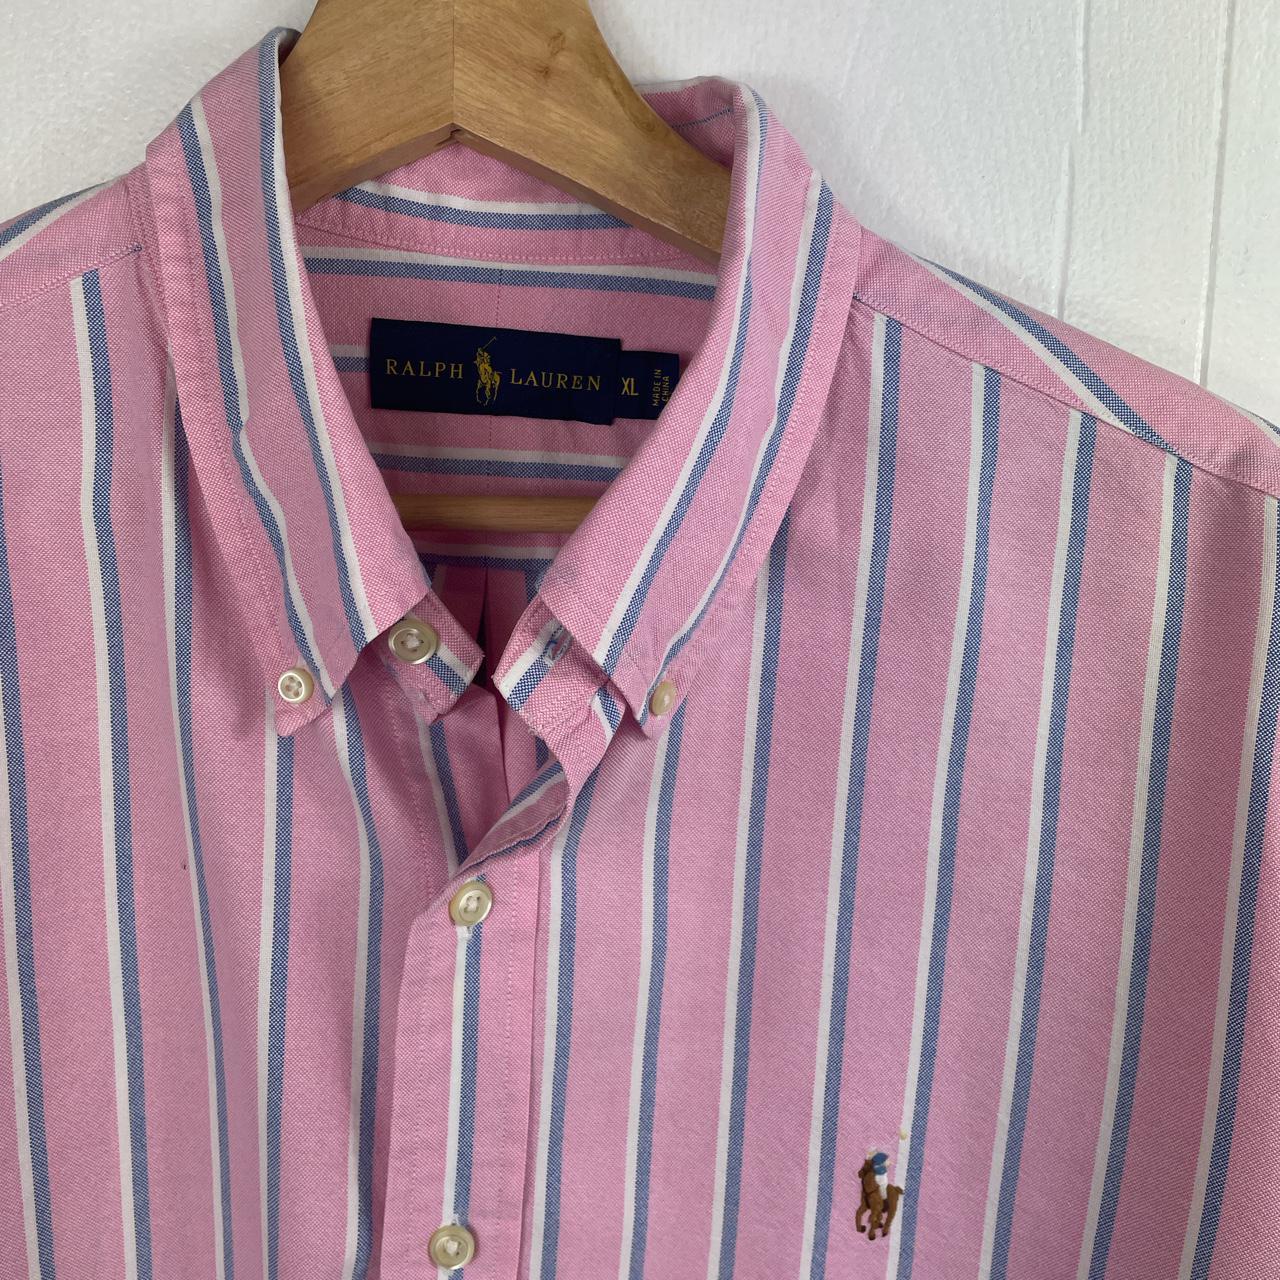 Ralph Lauren formal shirt in pink, white and blue... - Depop